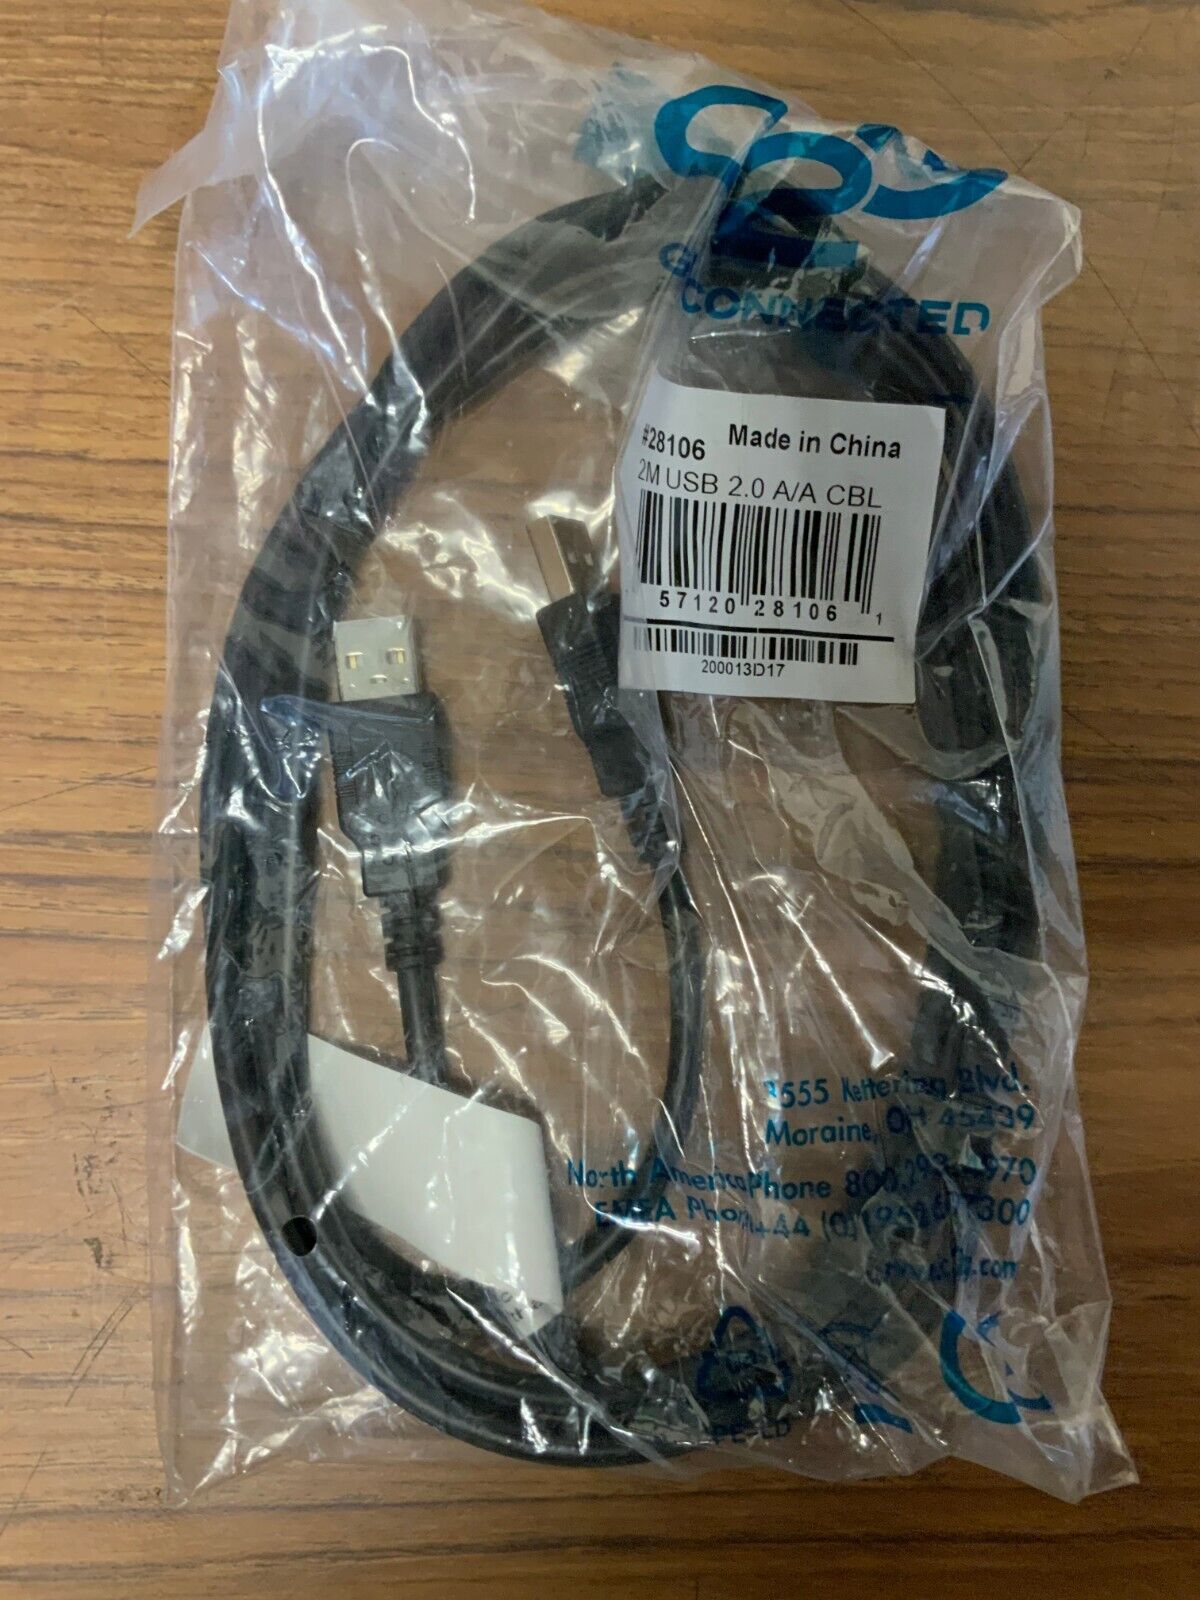 CablesToGo 2M USB 2.0 A/A Cable 28106 **